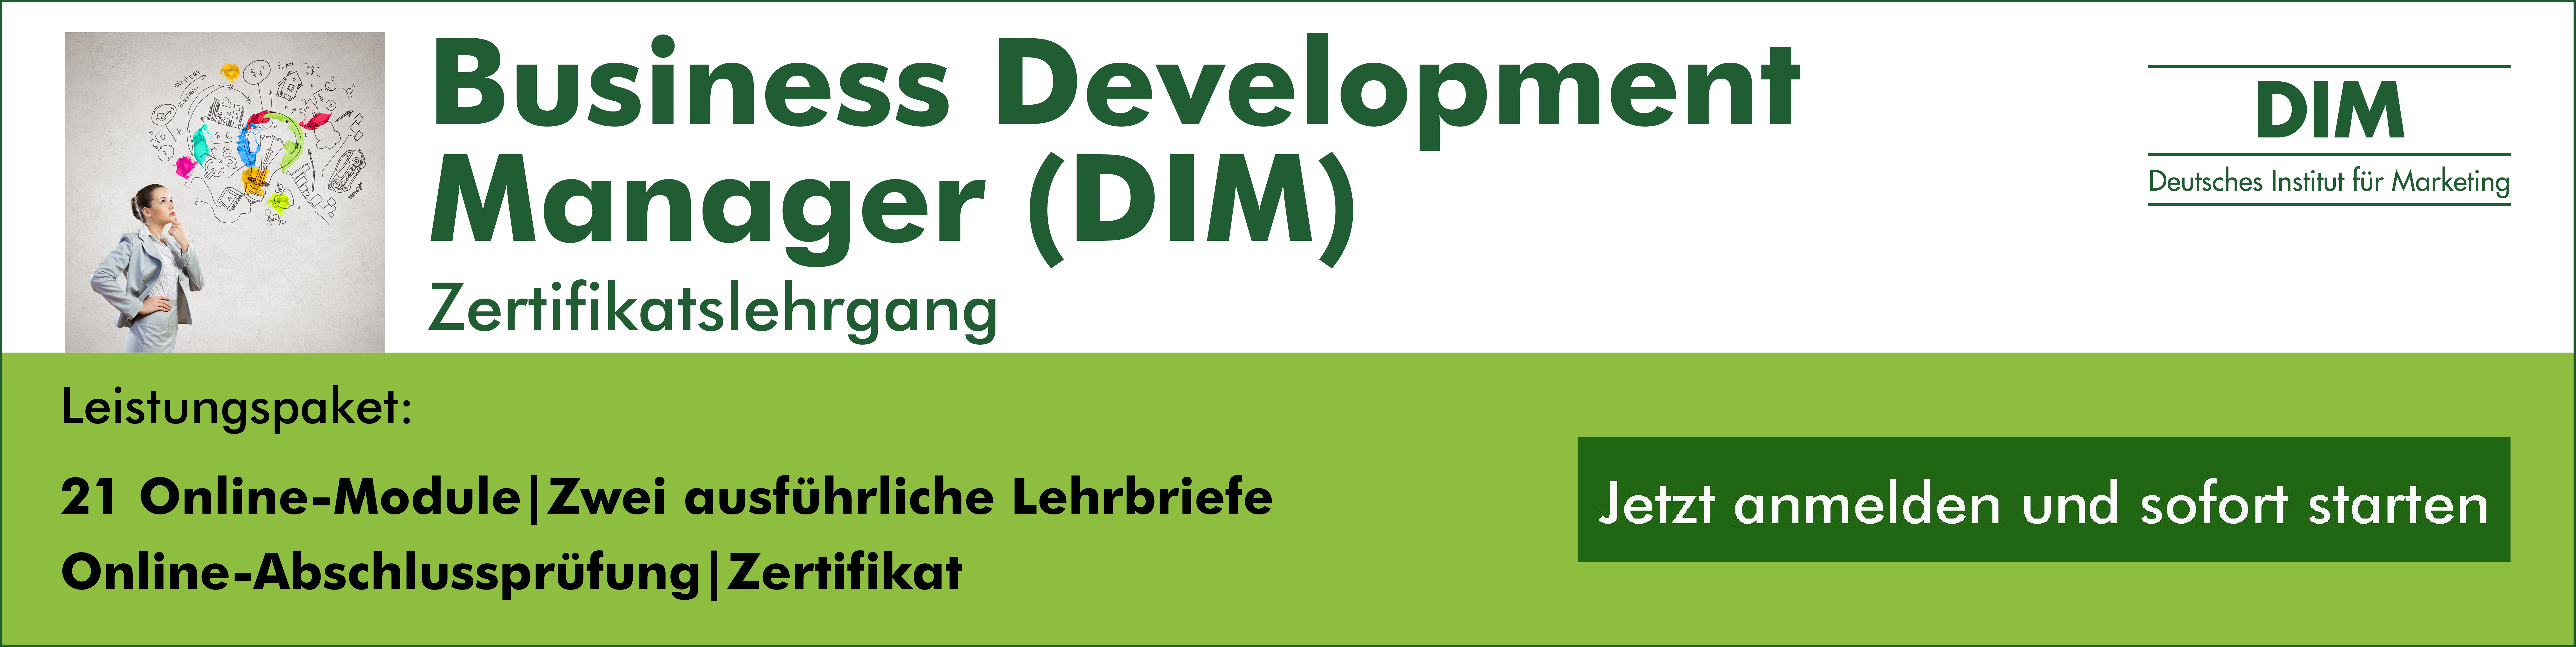 Business Development Manager (DIM)